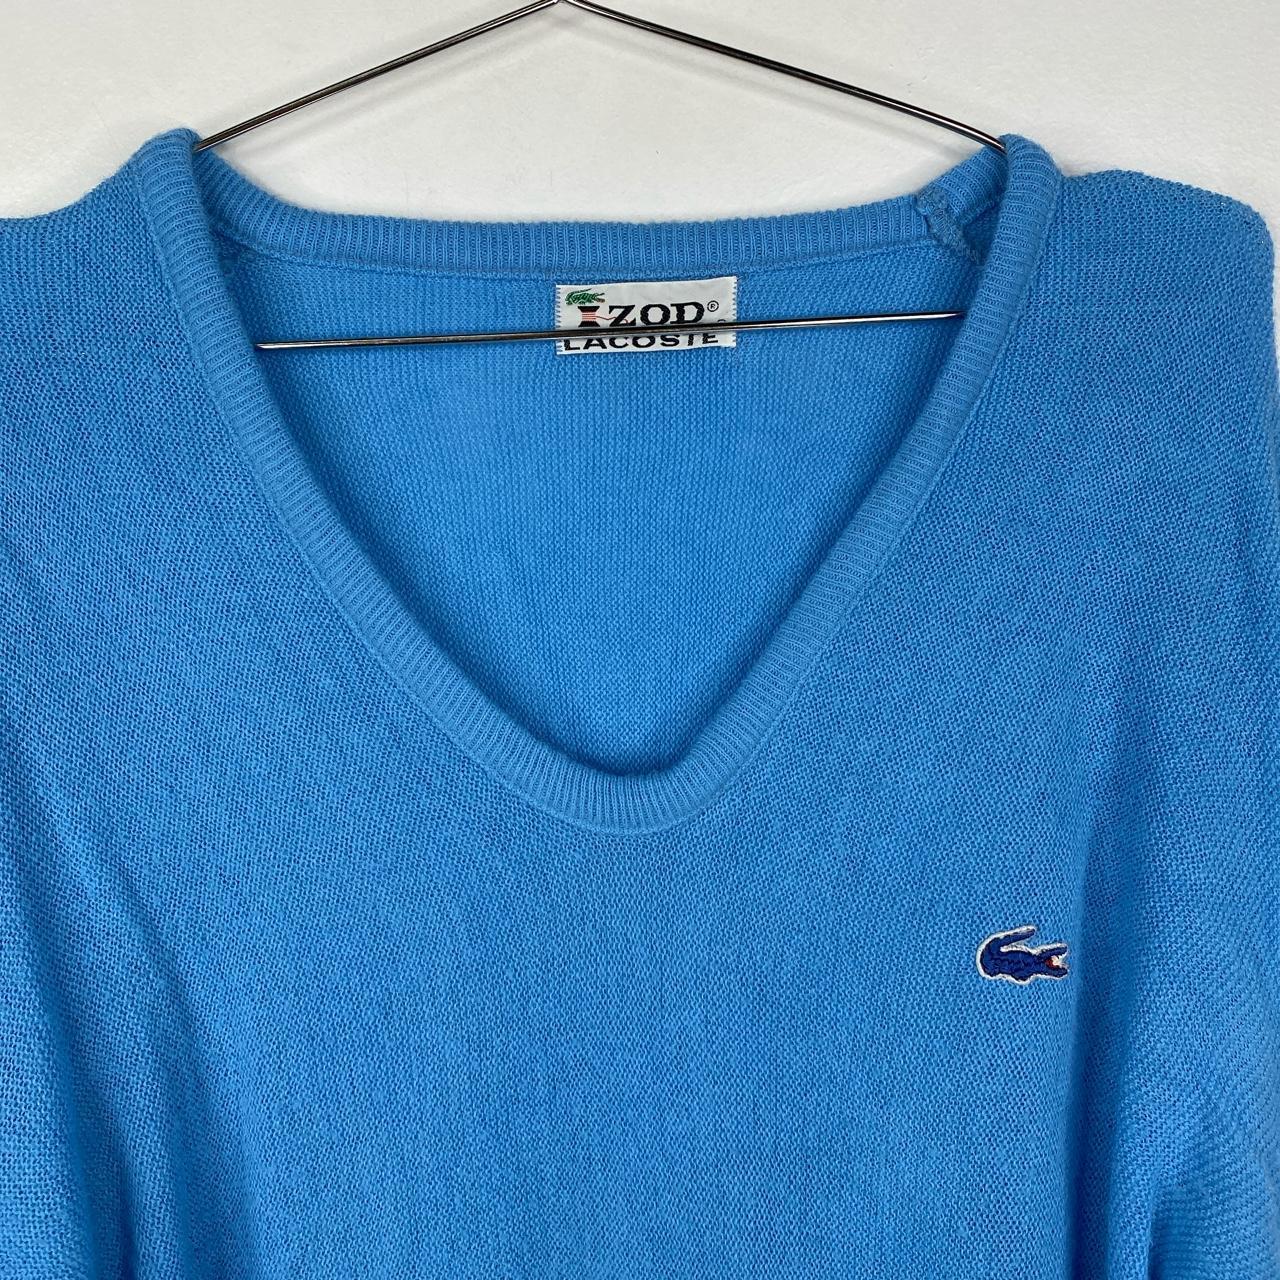 Product Image 3 - Vintage 90s Izod Lacoste blue